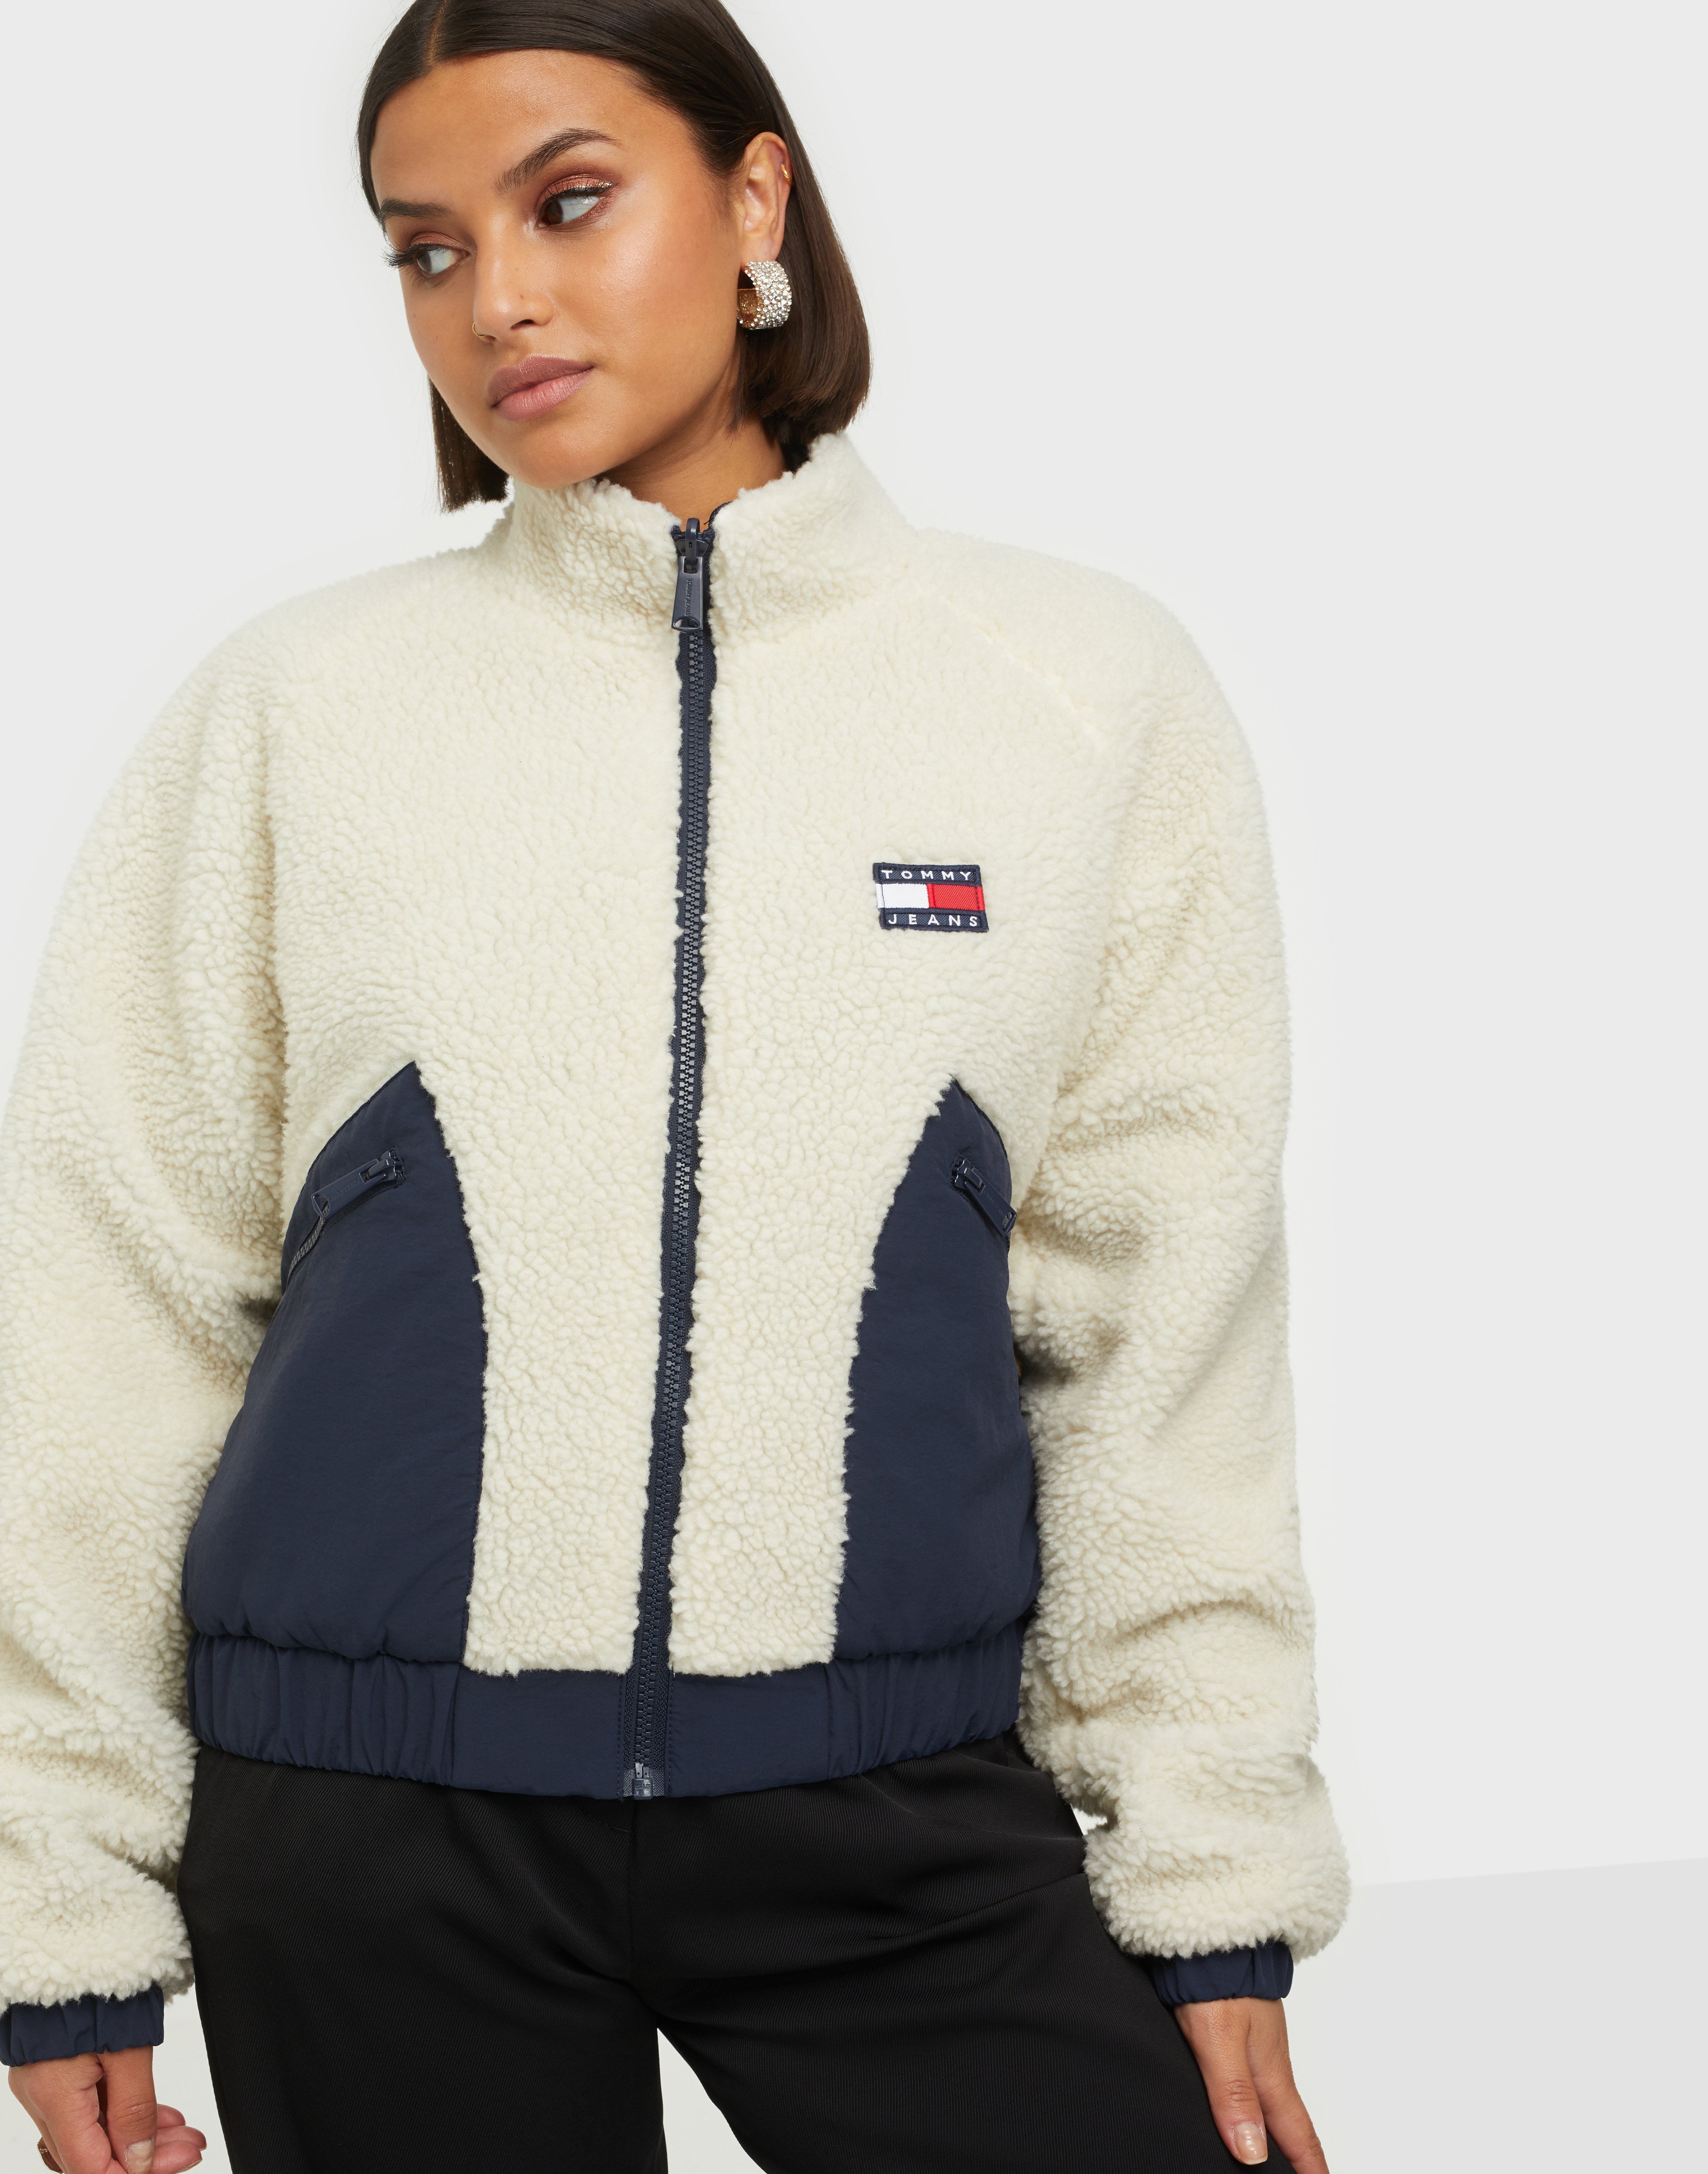 hilfiger sherpa jacket